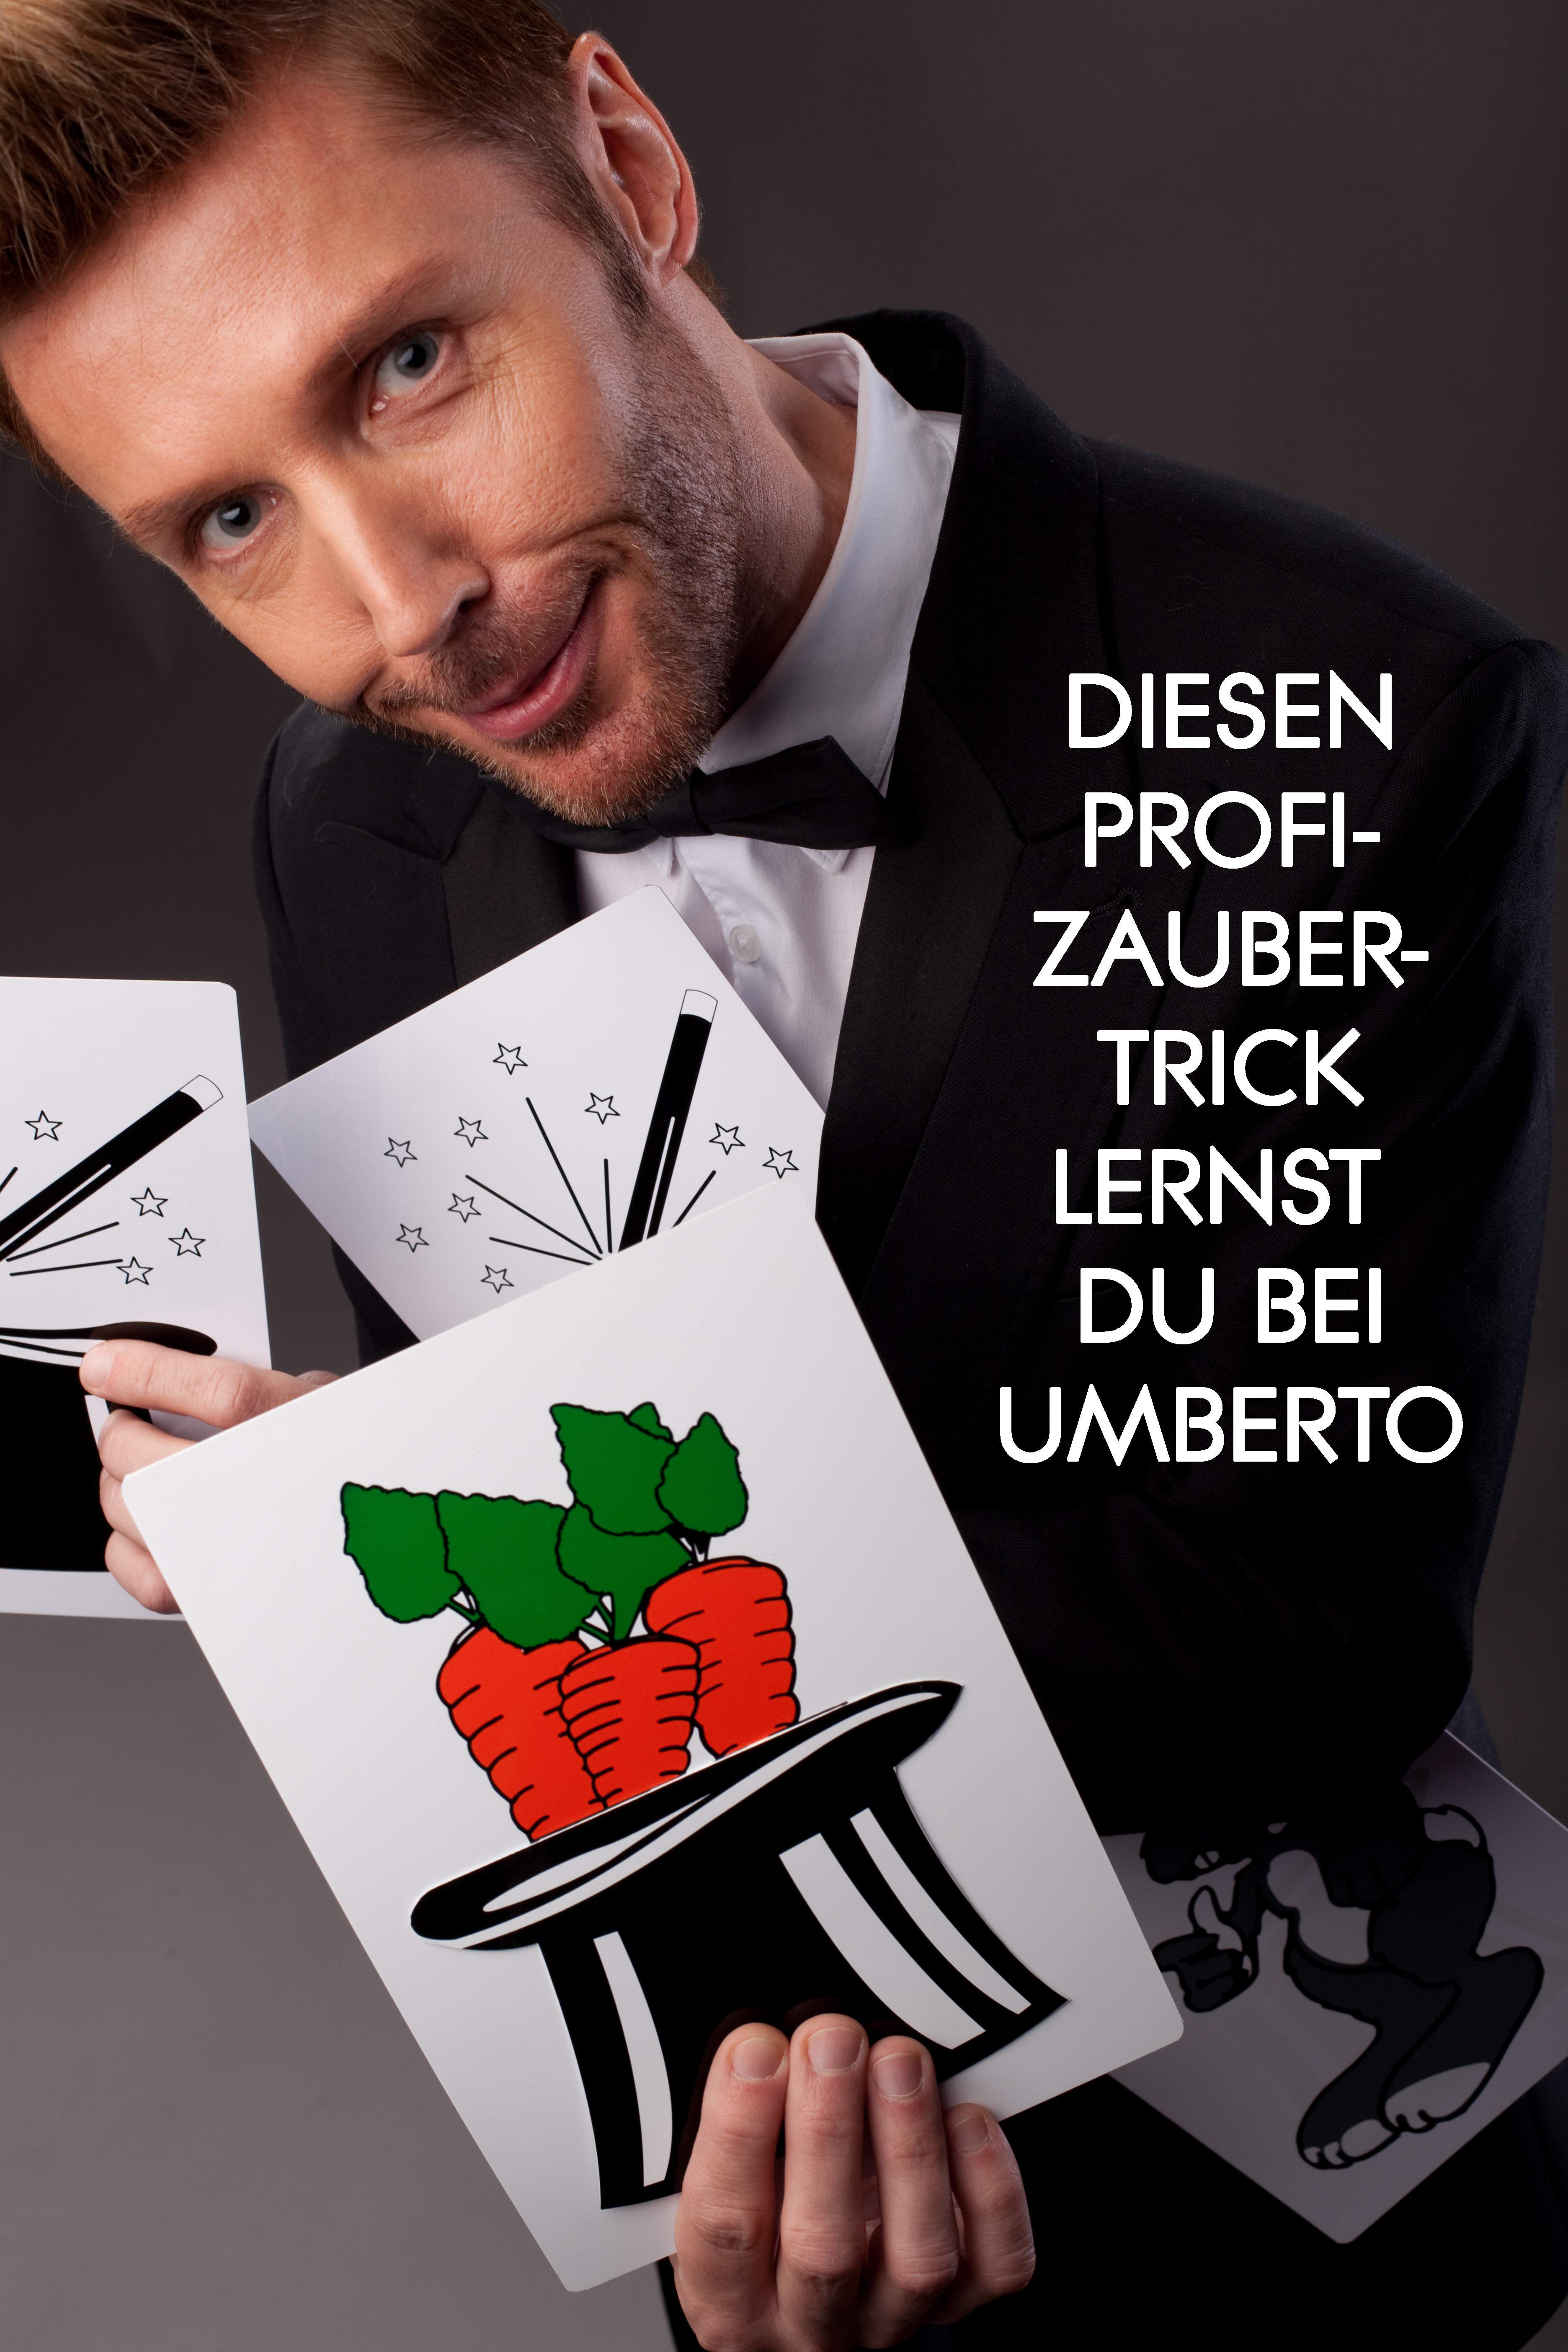 Lerne Zaubern mit Profi Zauberer Umberto - 5. Juli 2022